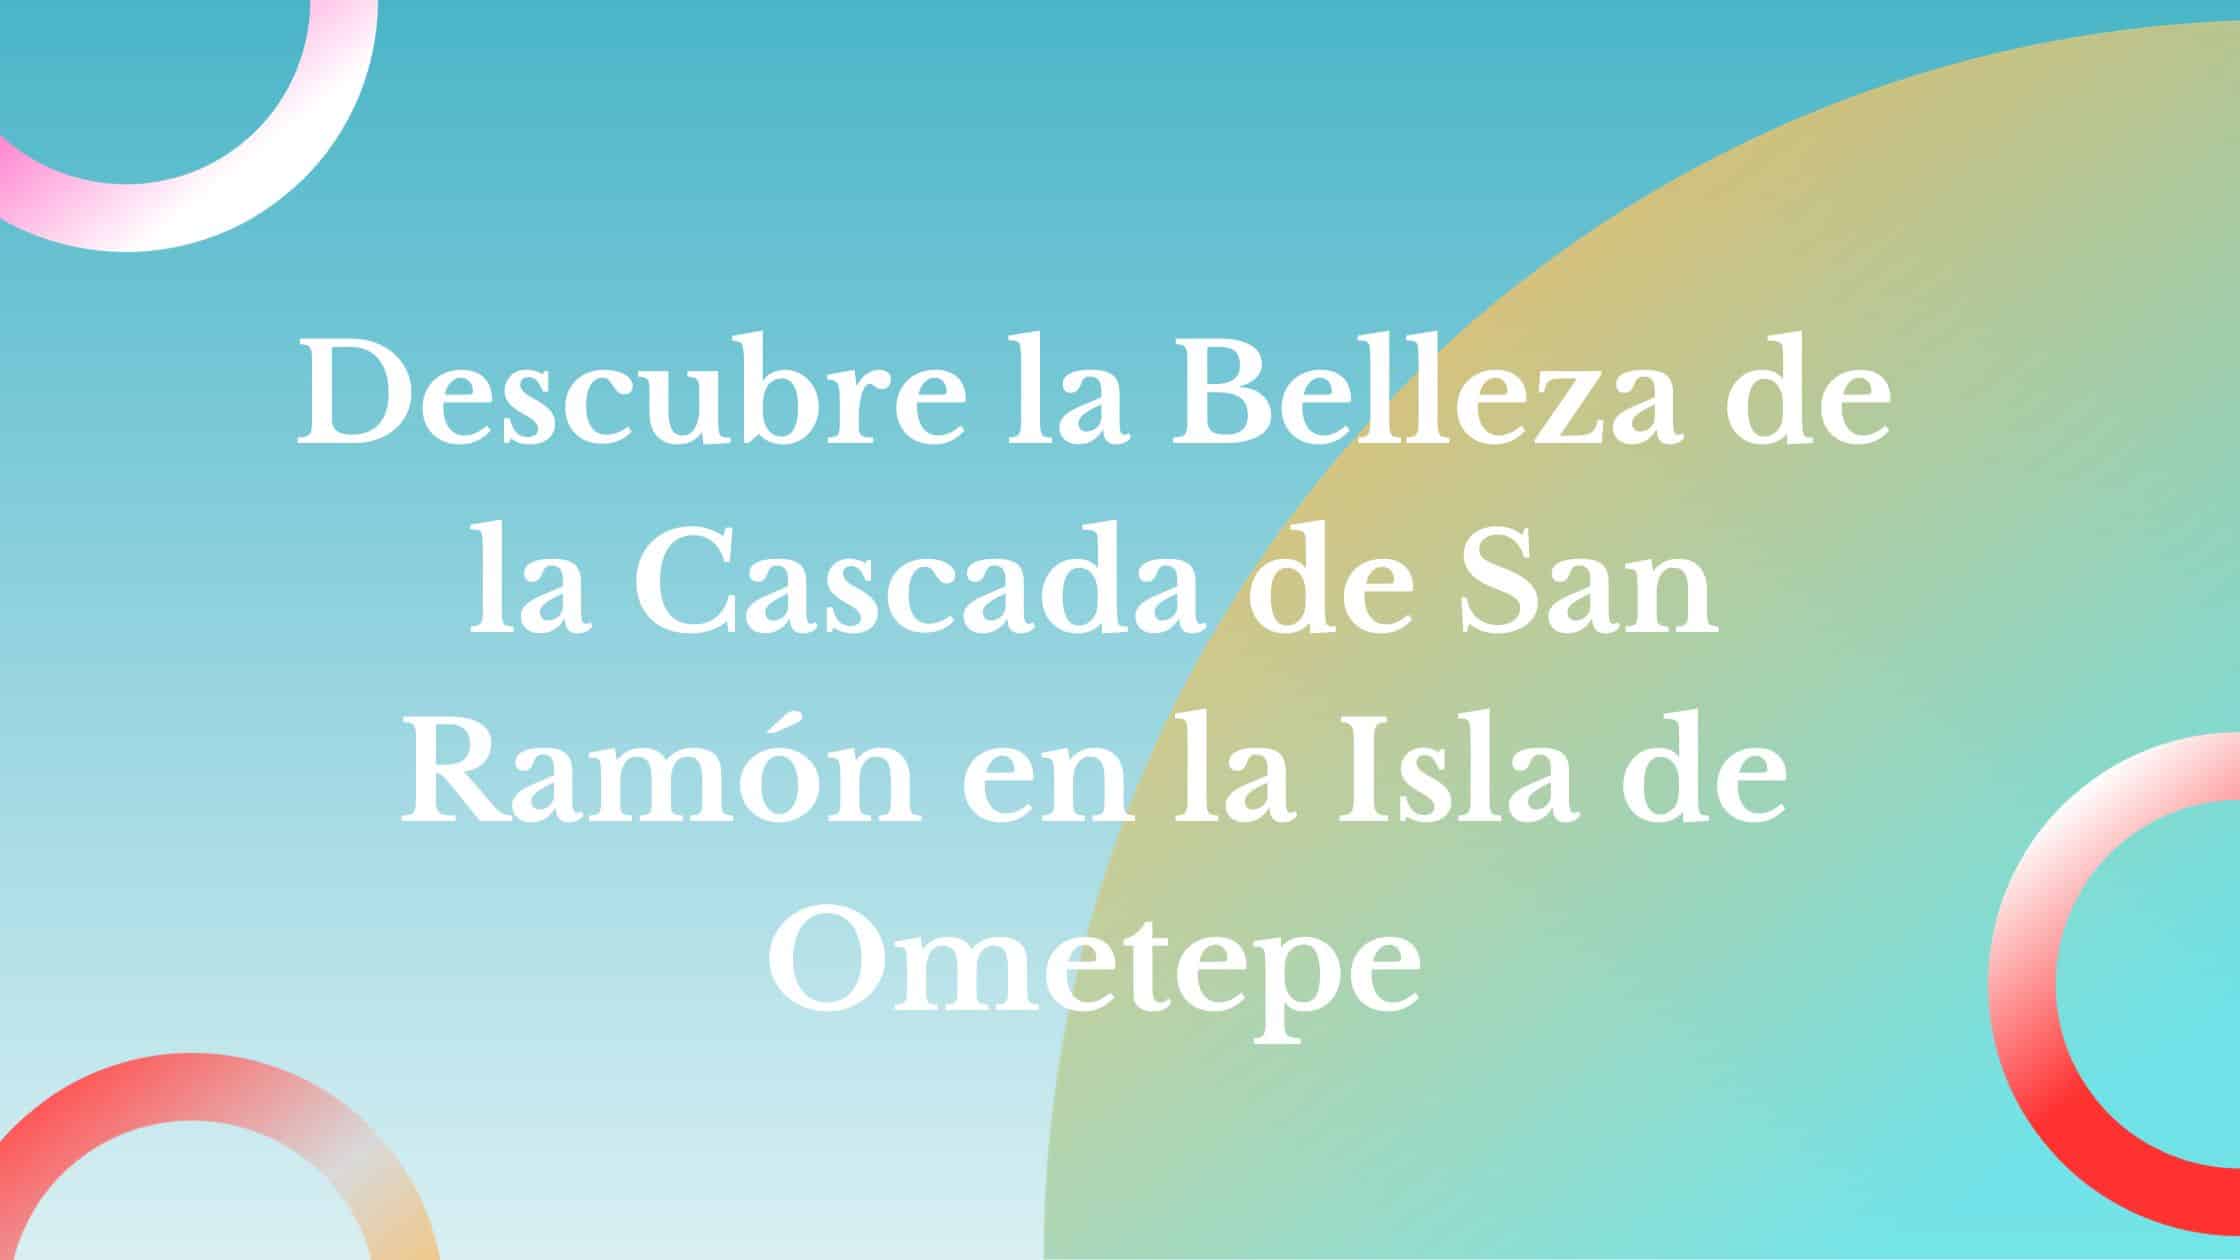 Descubre la Belleza de la Cascada de San Ramon en la Isla de Ometepe